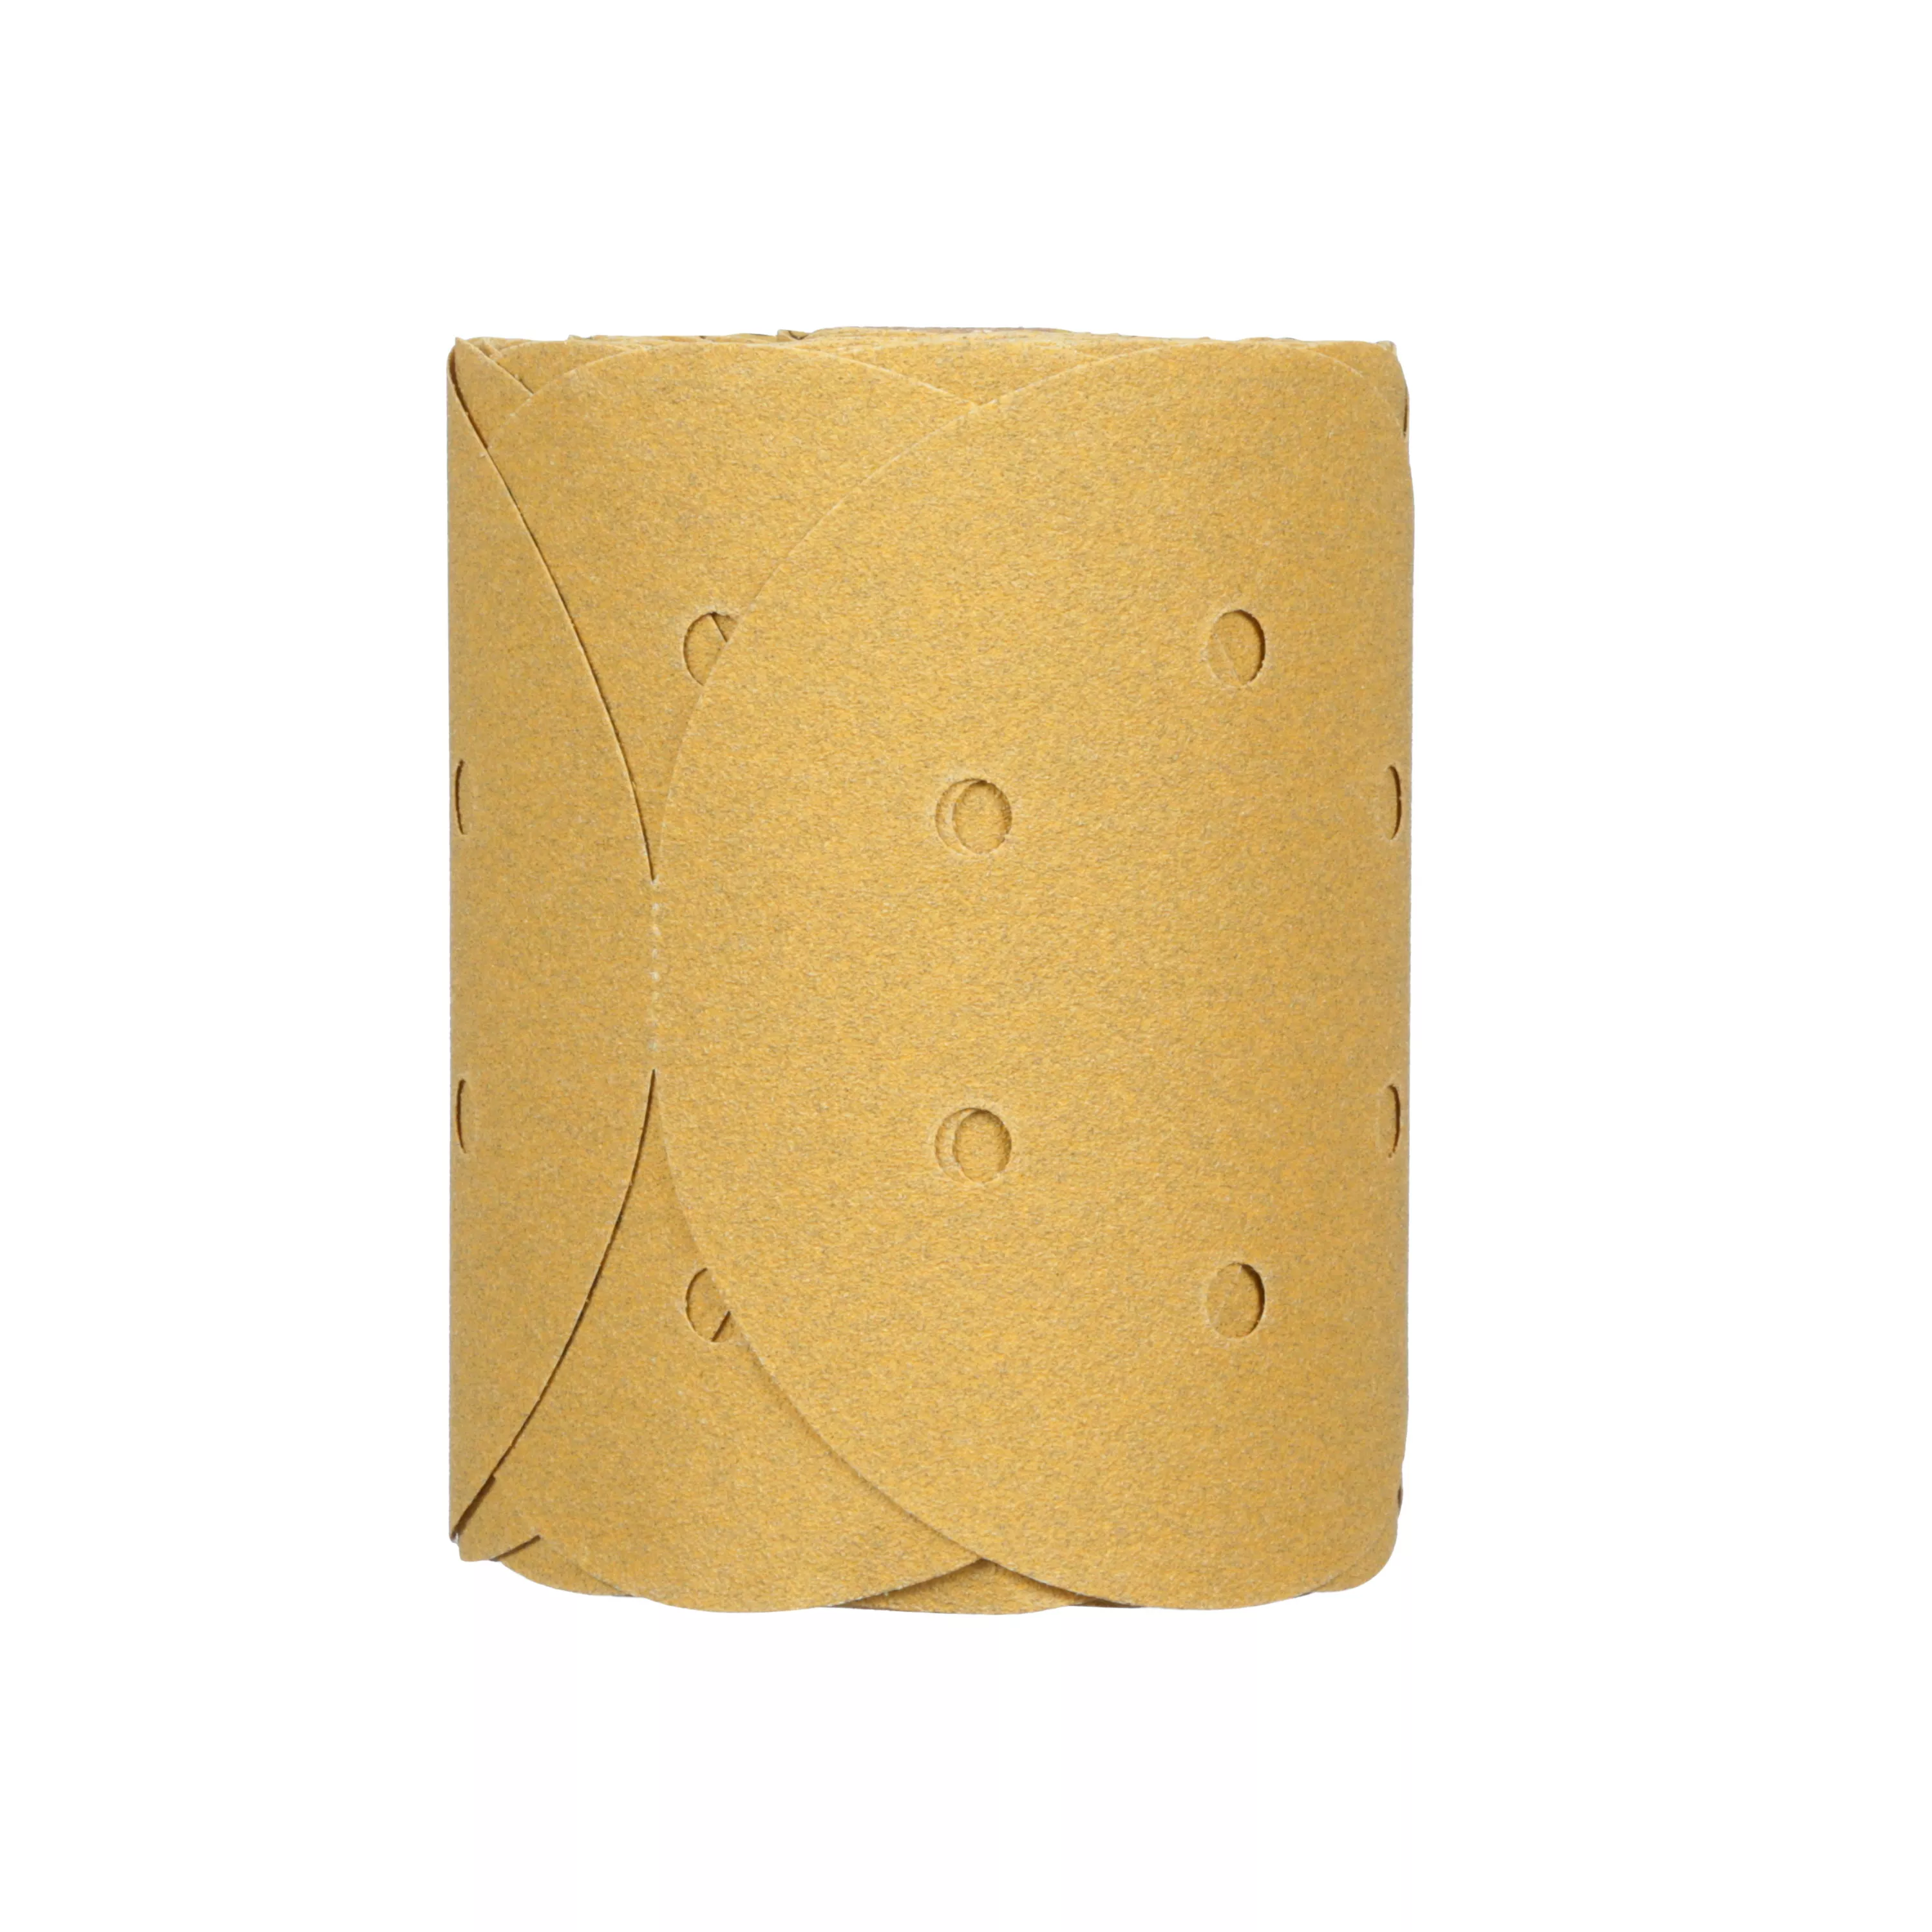 3M™ Stikit™ Gold Disc Roll Dust Free, 01643, 6 in, P80, 125 discs per
roll, 10 rolls per case